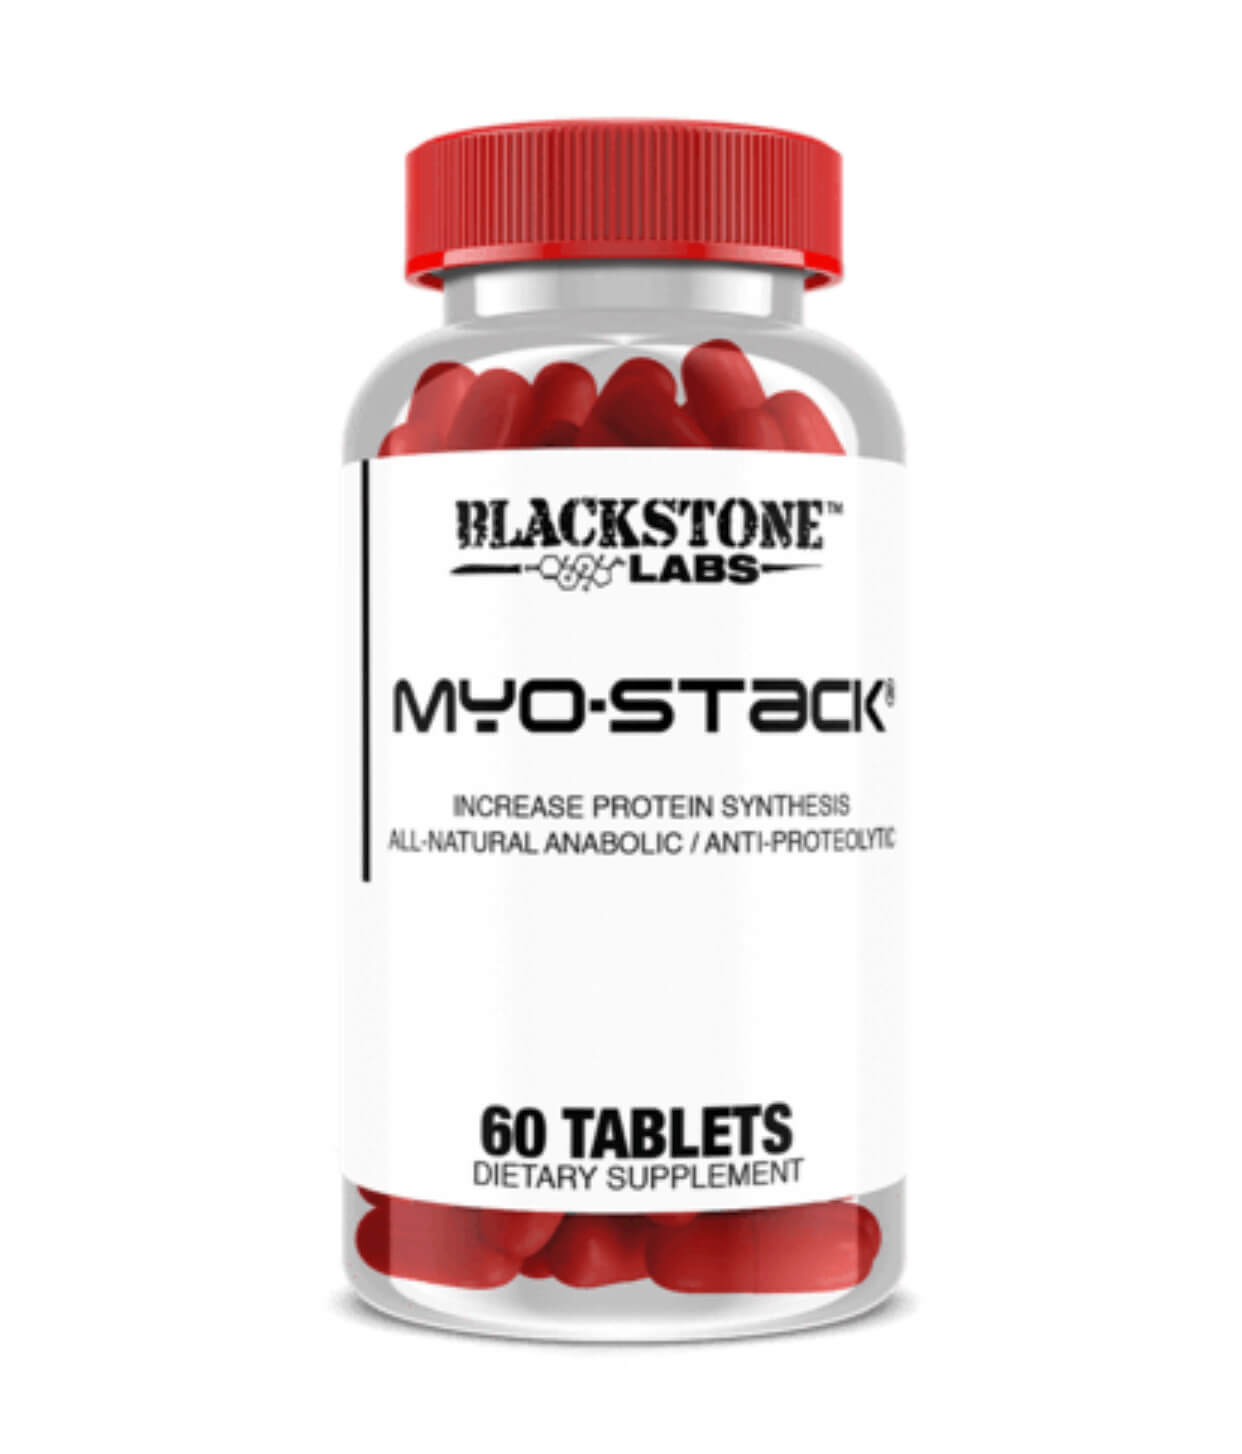 Myo-Stack by Blackstone Labs